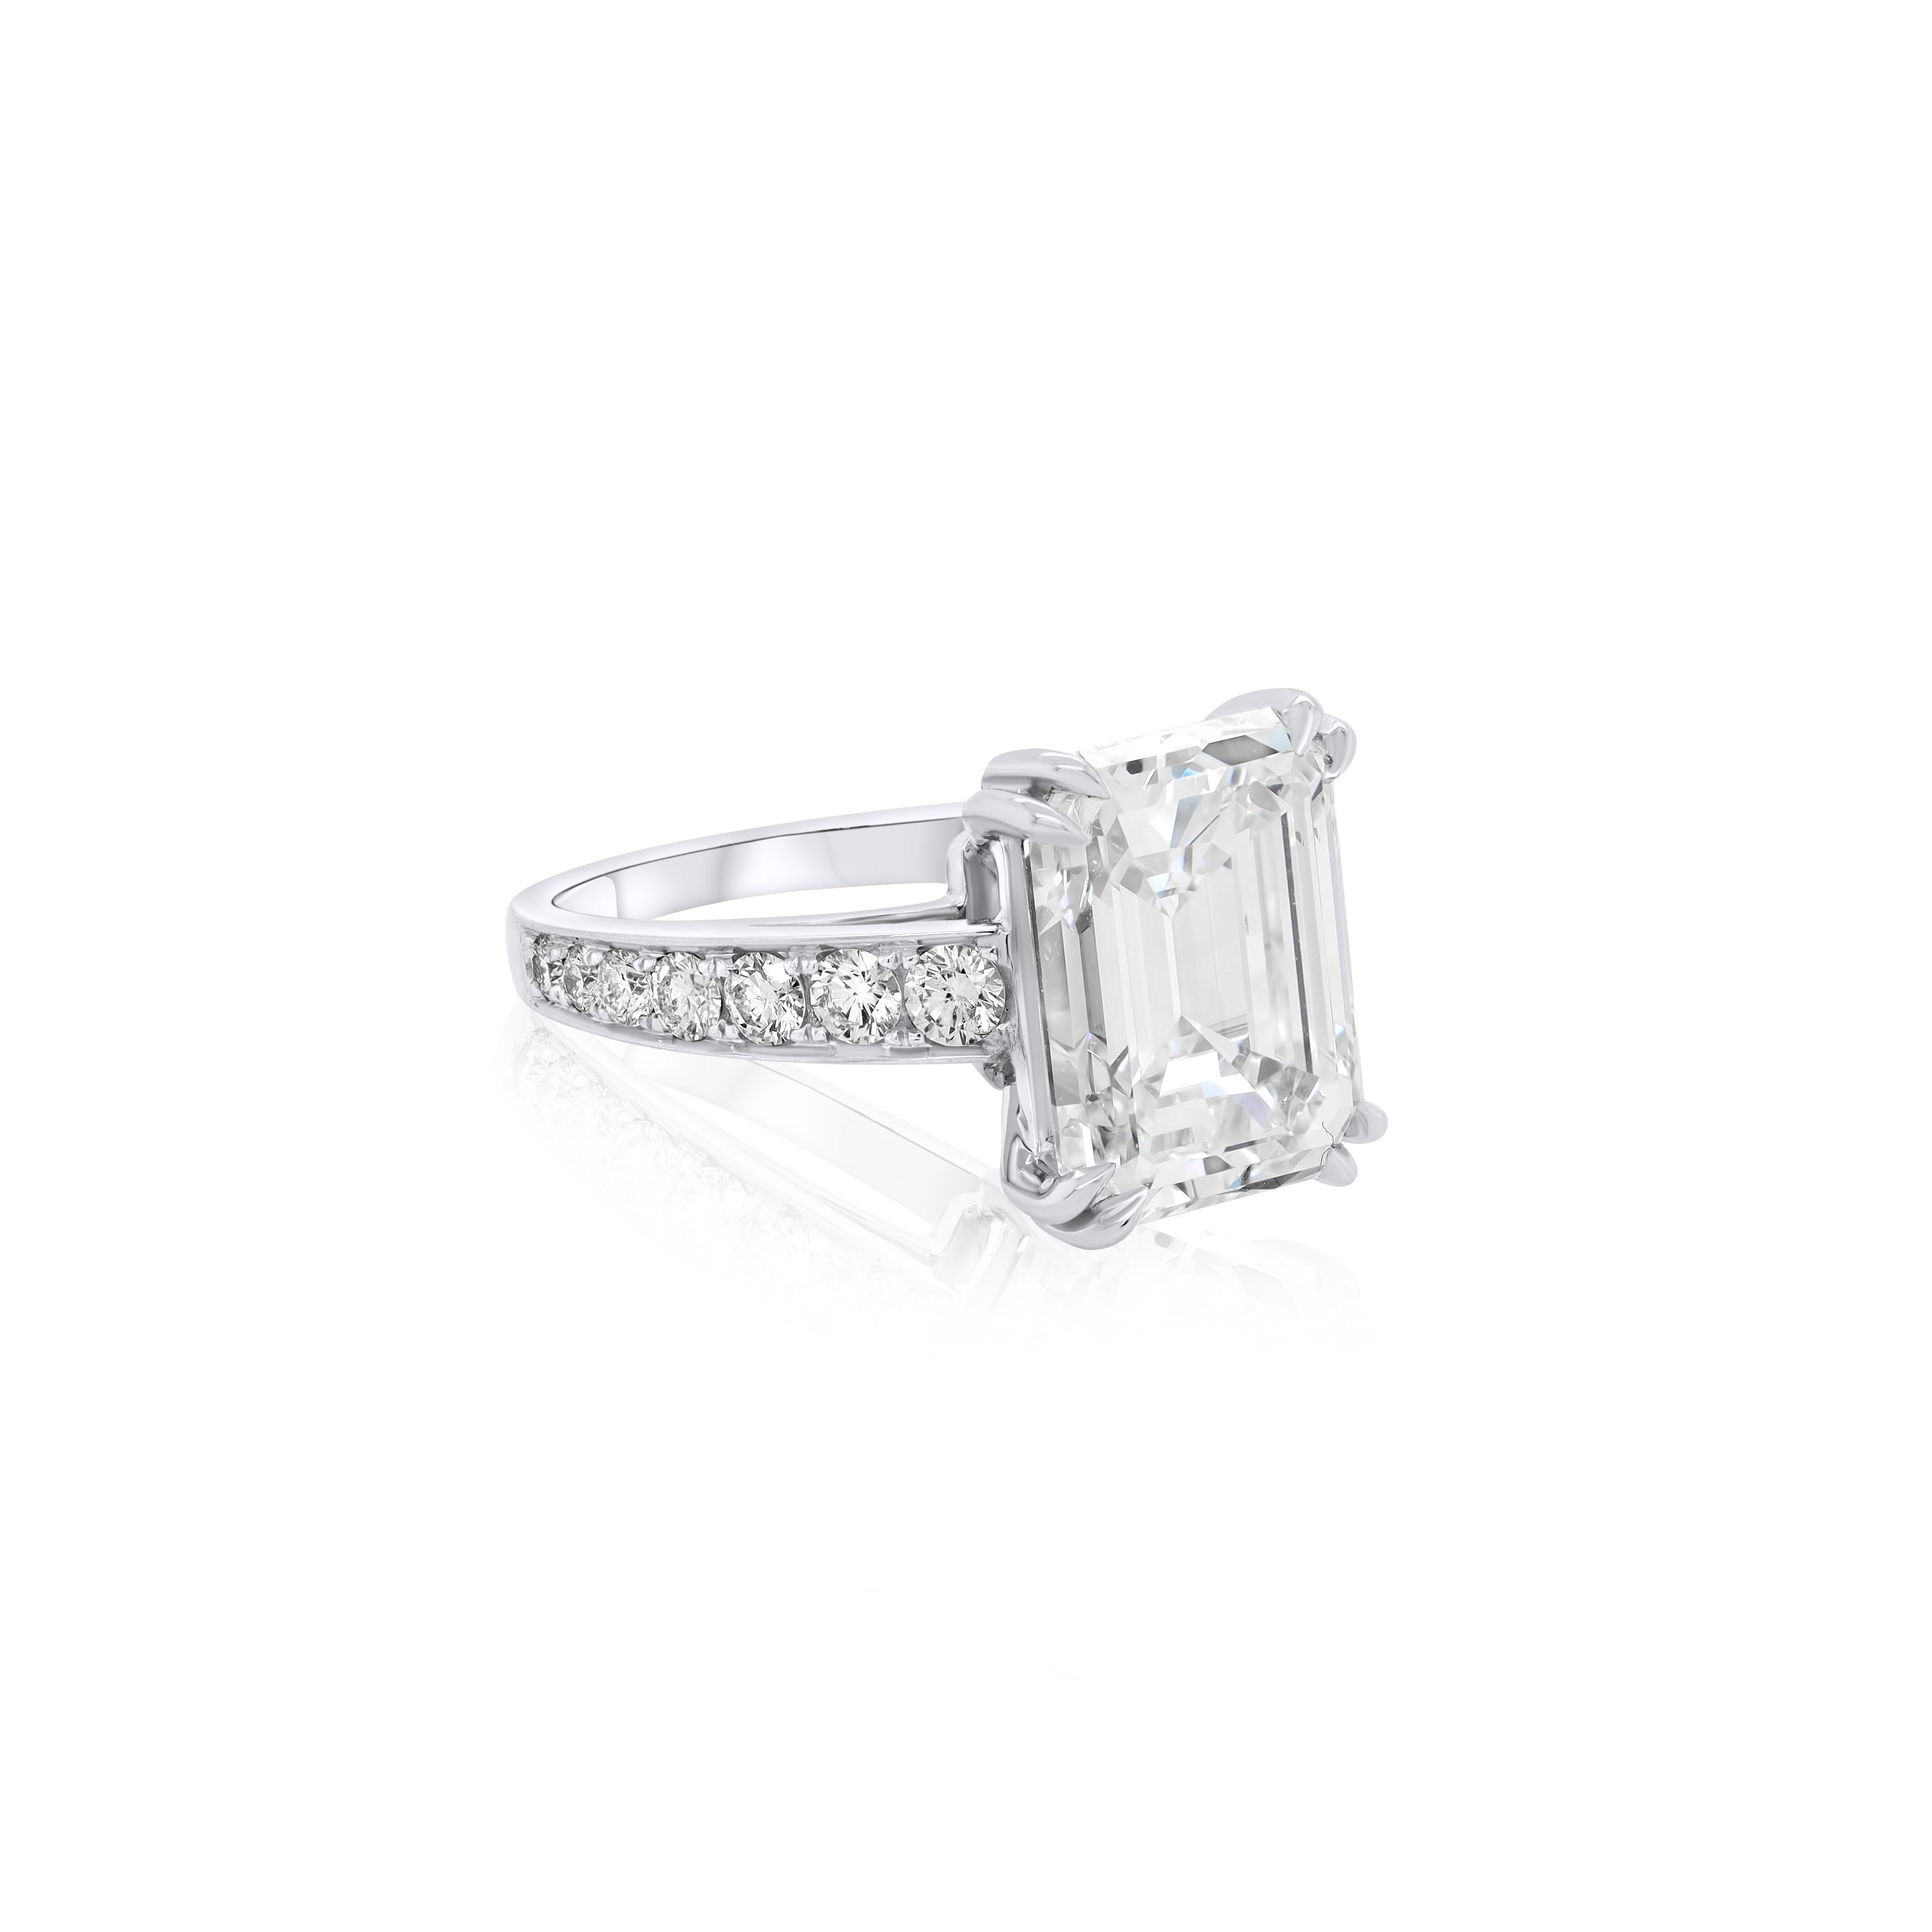 Platinum diamond ring features 7.59CTS G VS1 GIA#2215687521 emerald cut diamond set with 1.60 carats of diamonds. 
